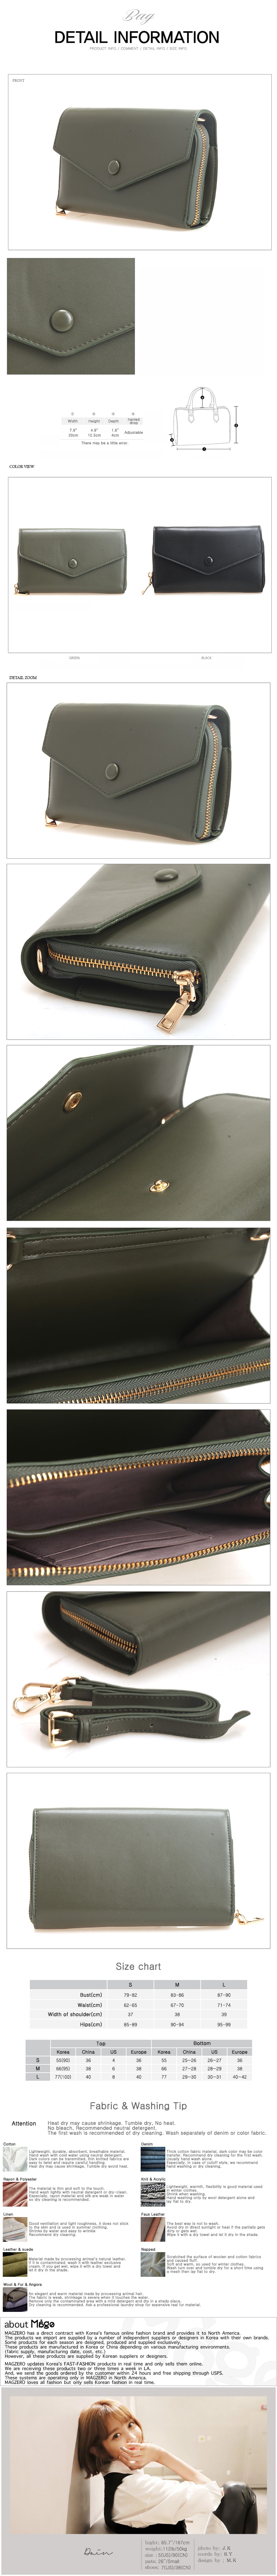 KOREA Crossbody and Clutch Mini Flap Bag Olive Green [Free Shipping]